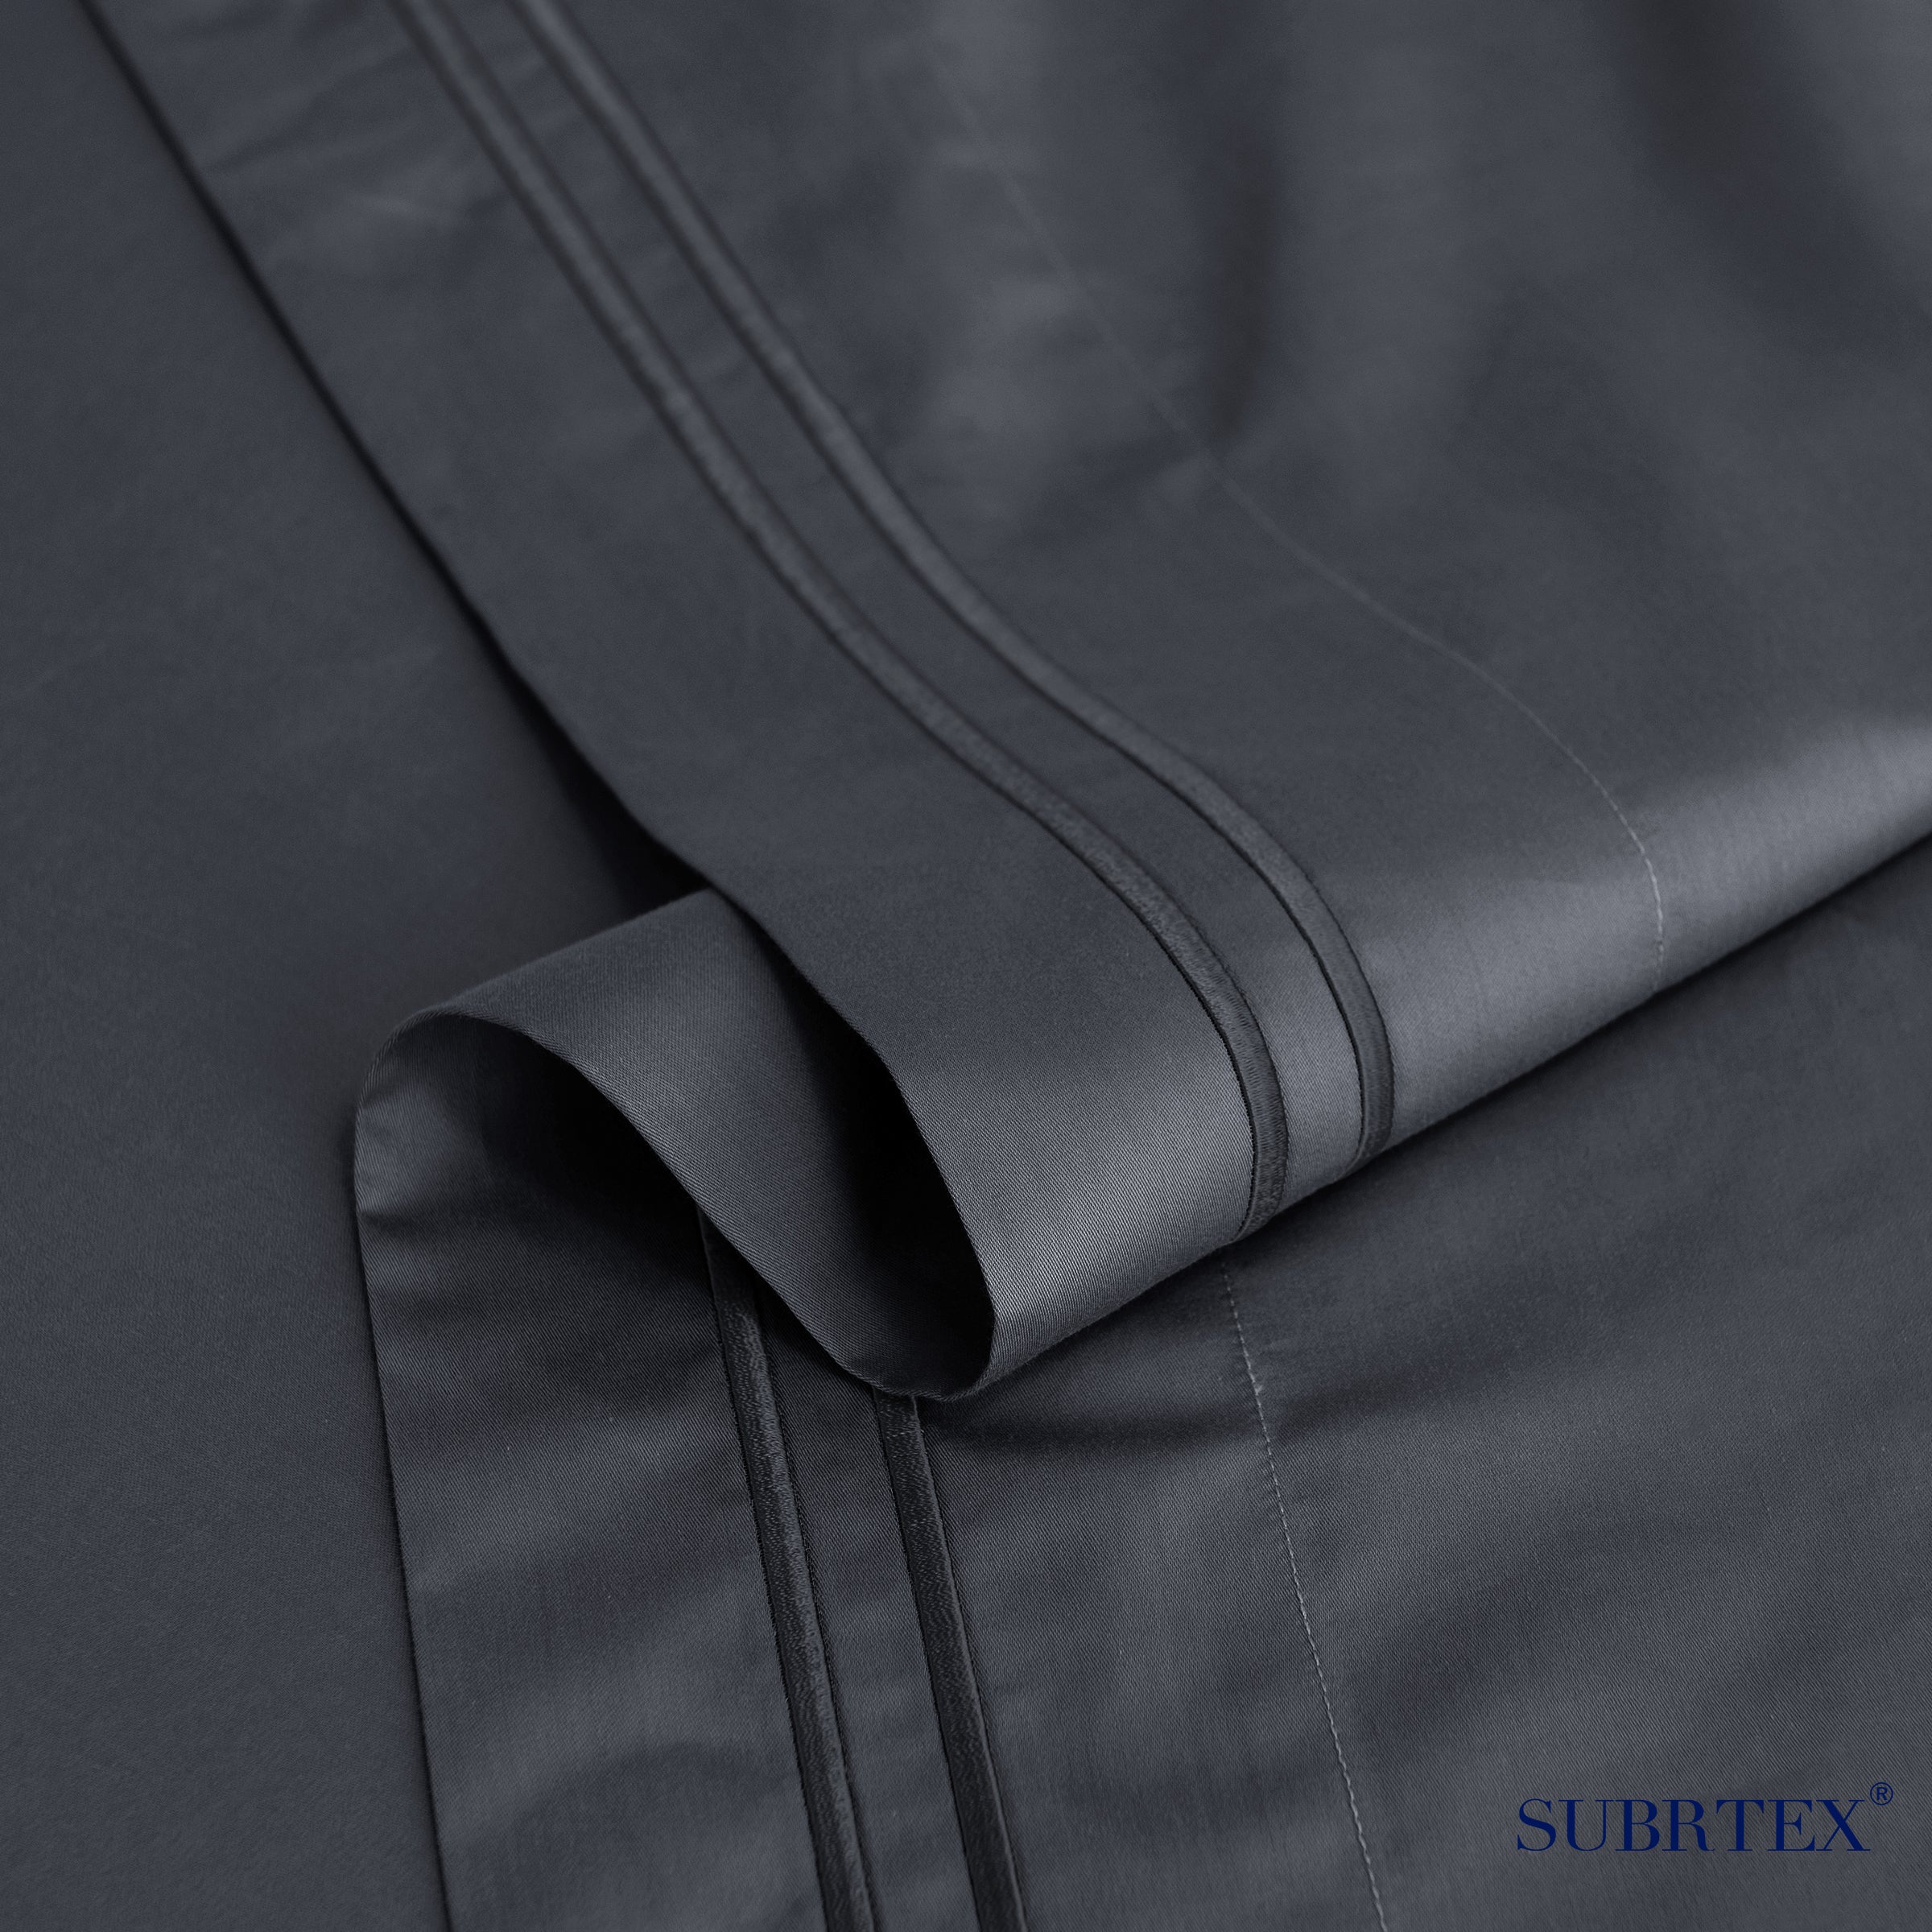 Subtex 300-Thread Count Tencel Duvet Cover & Pillowcases Set